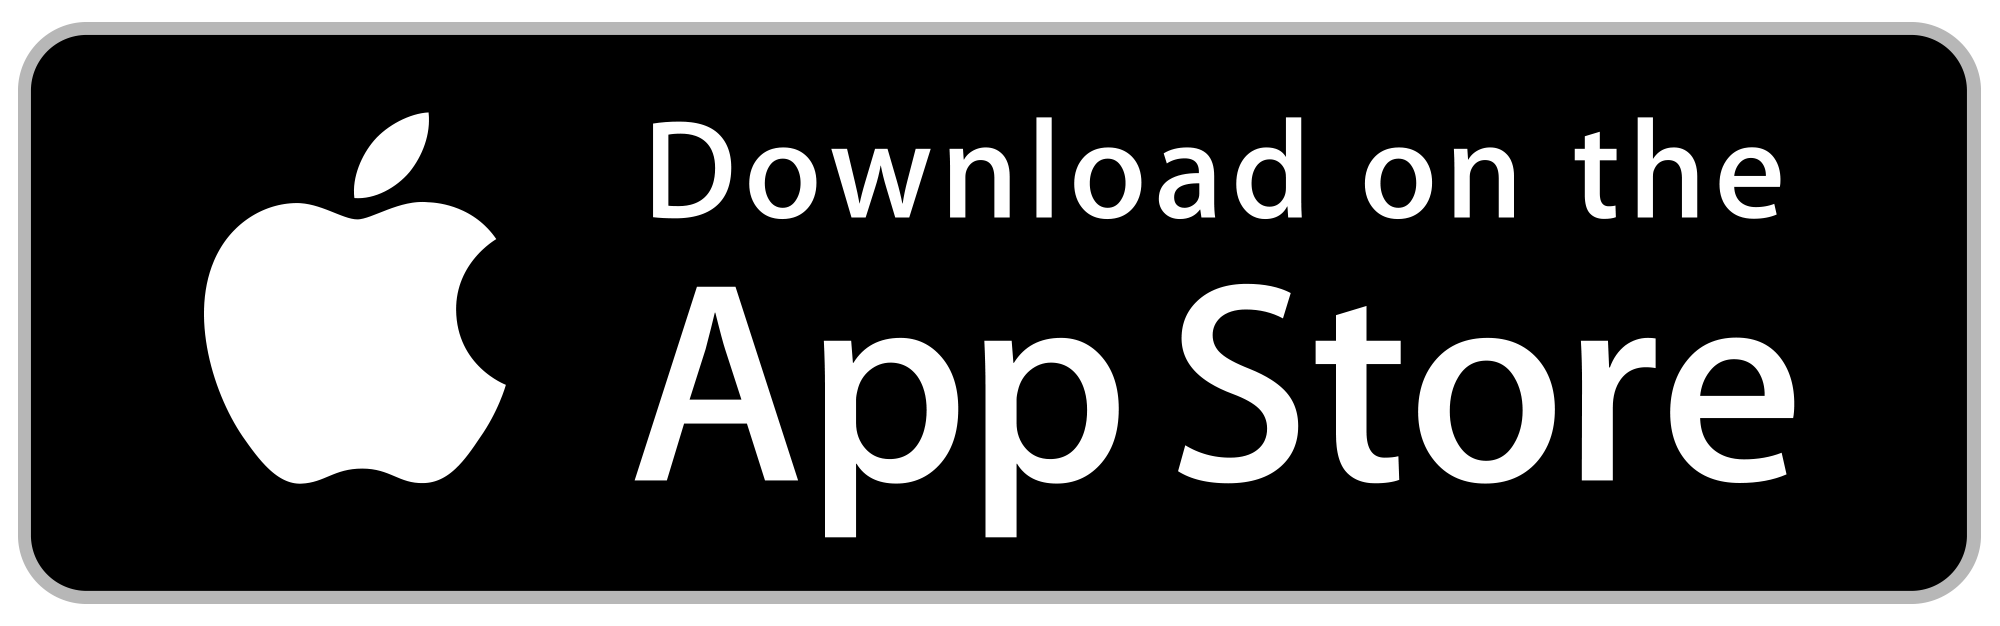 Download Plaans Pocket at App Store